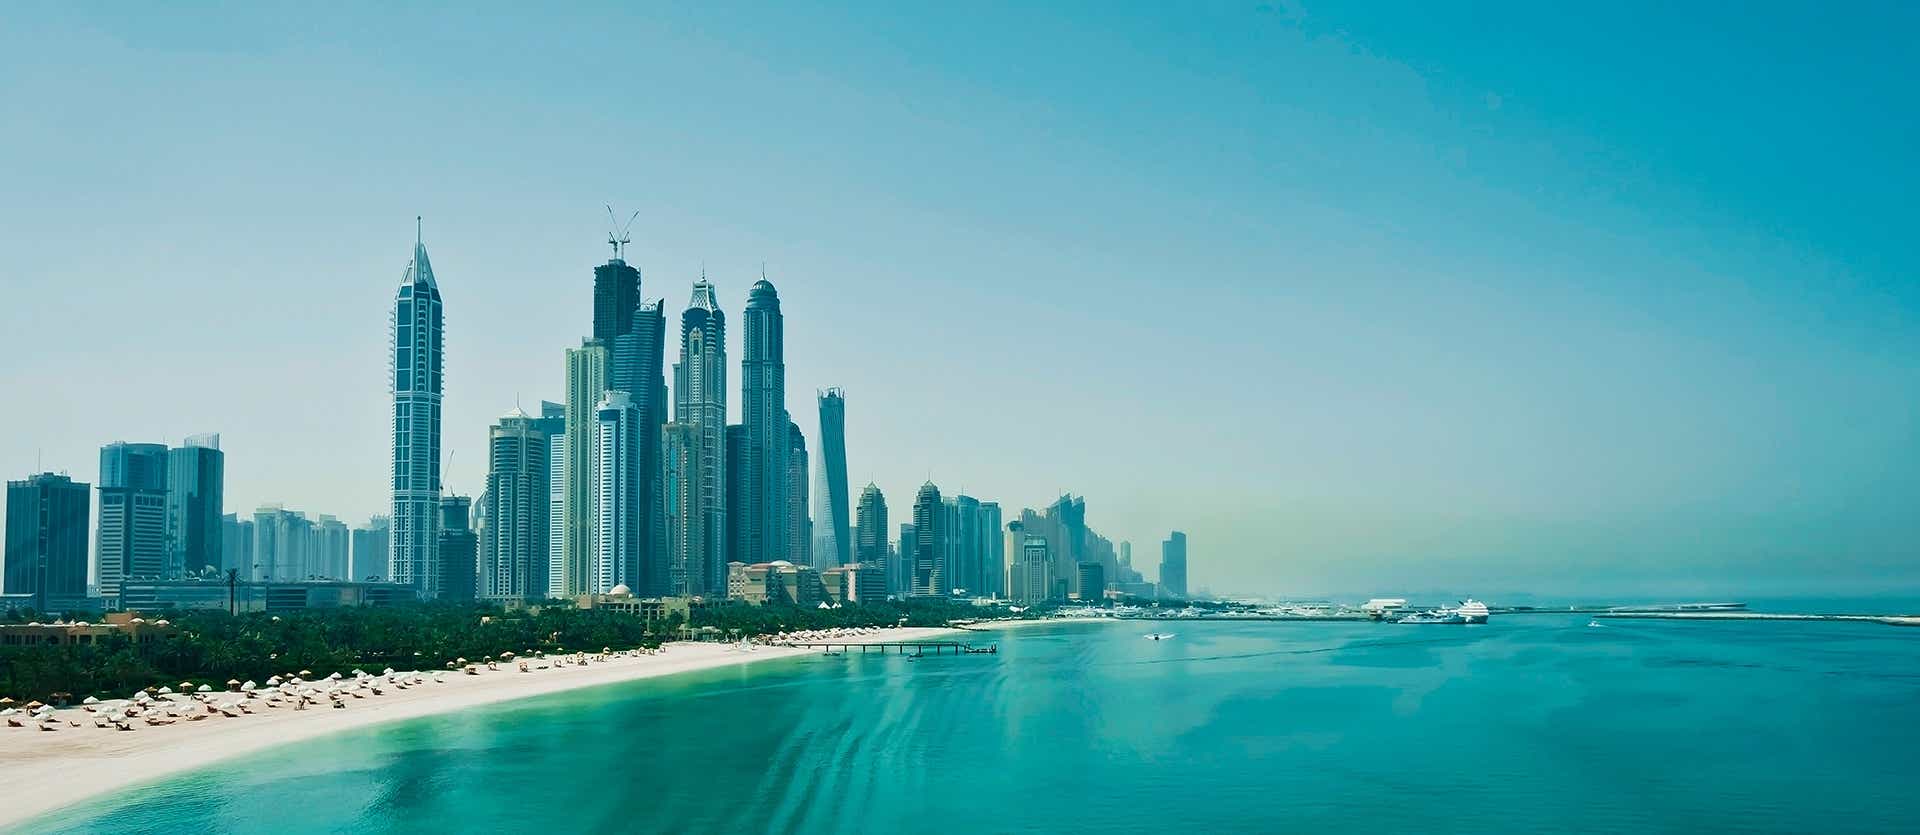 Dubai Skyline <span class="iconos separador"></span> United Arab Emirates